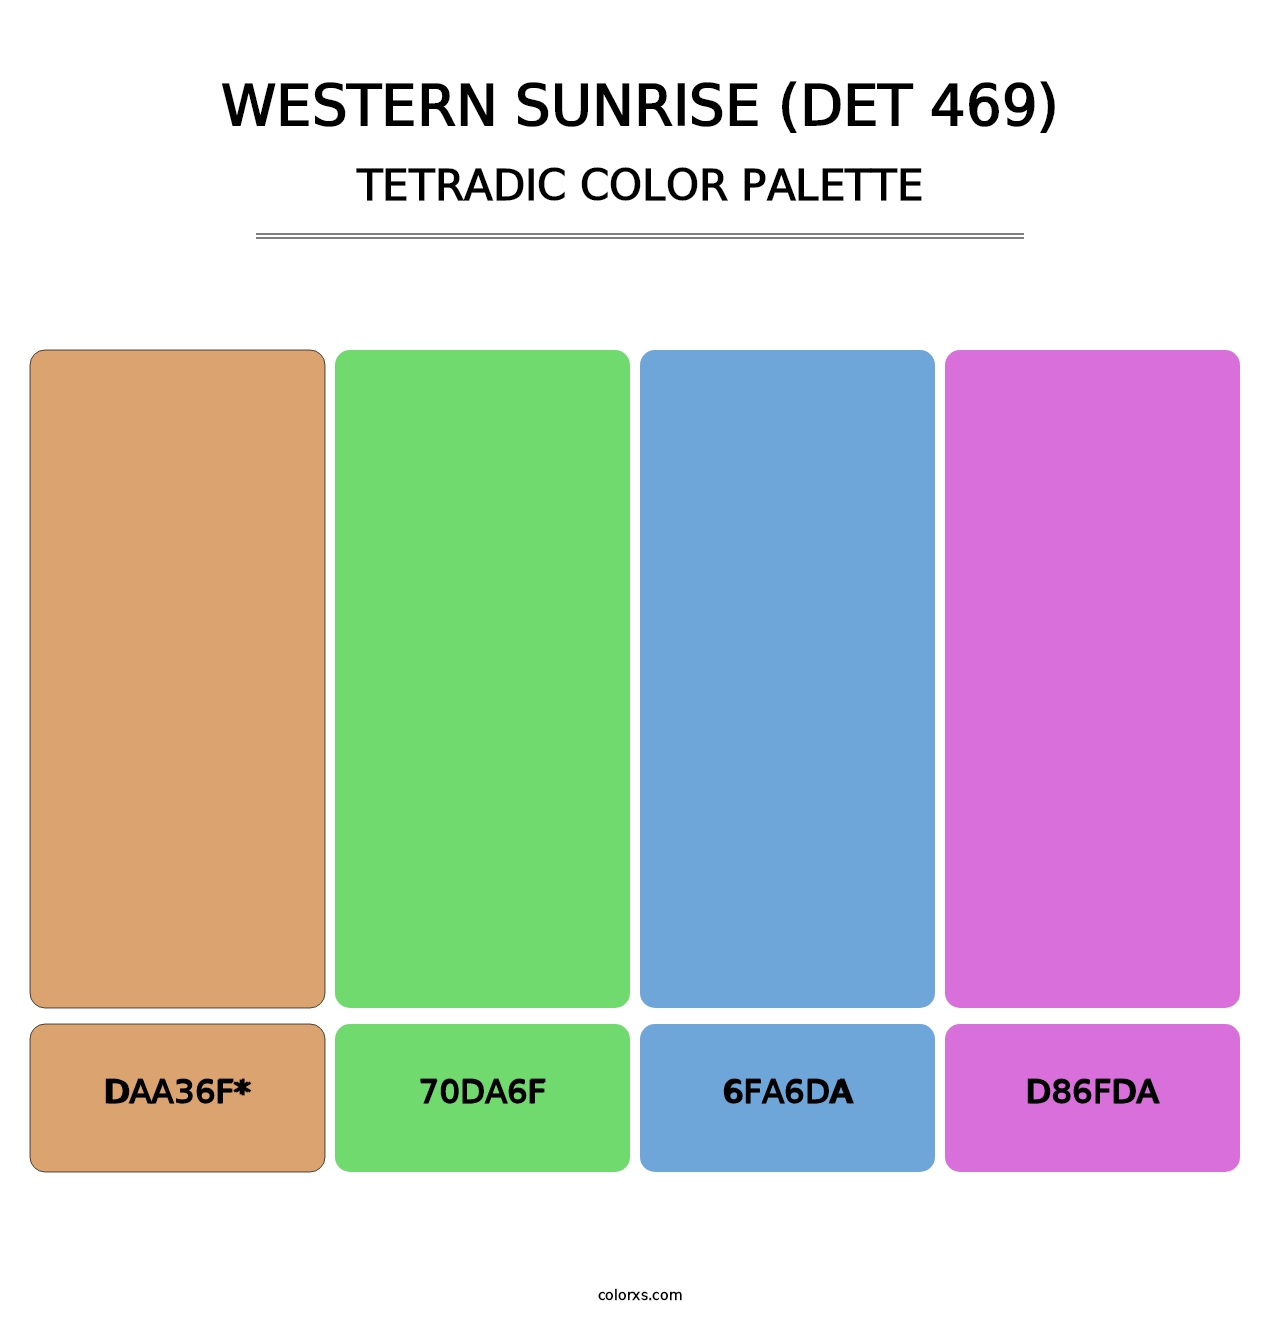 Western Sunrise (DET 469) - Tetradic Color Palette